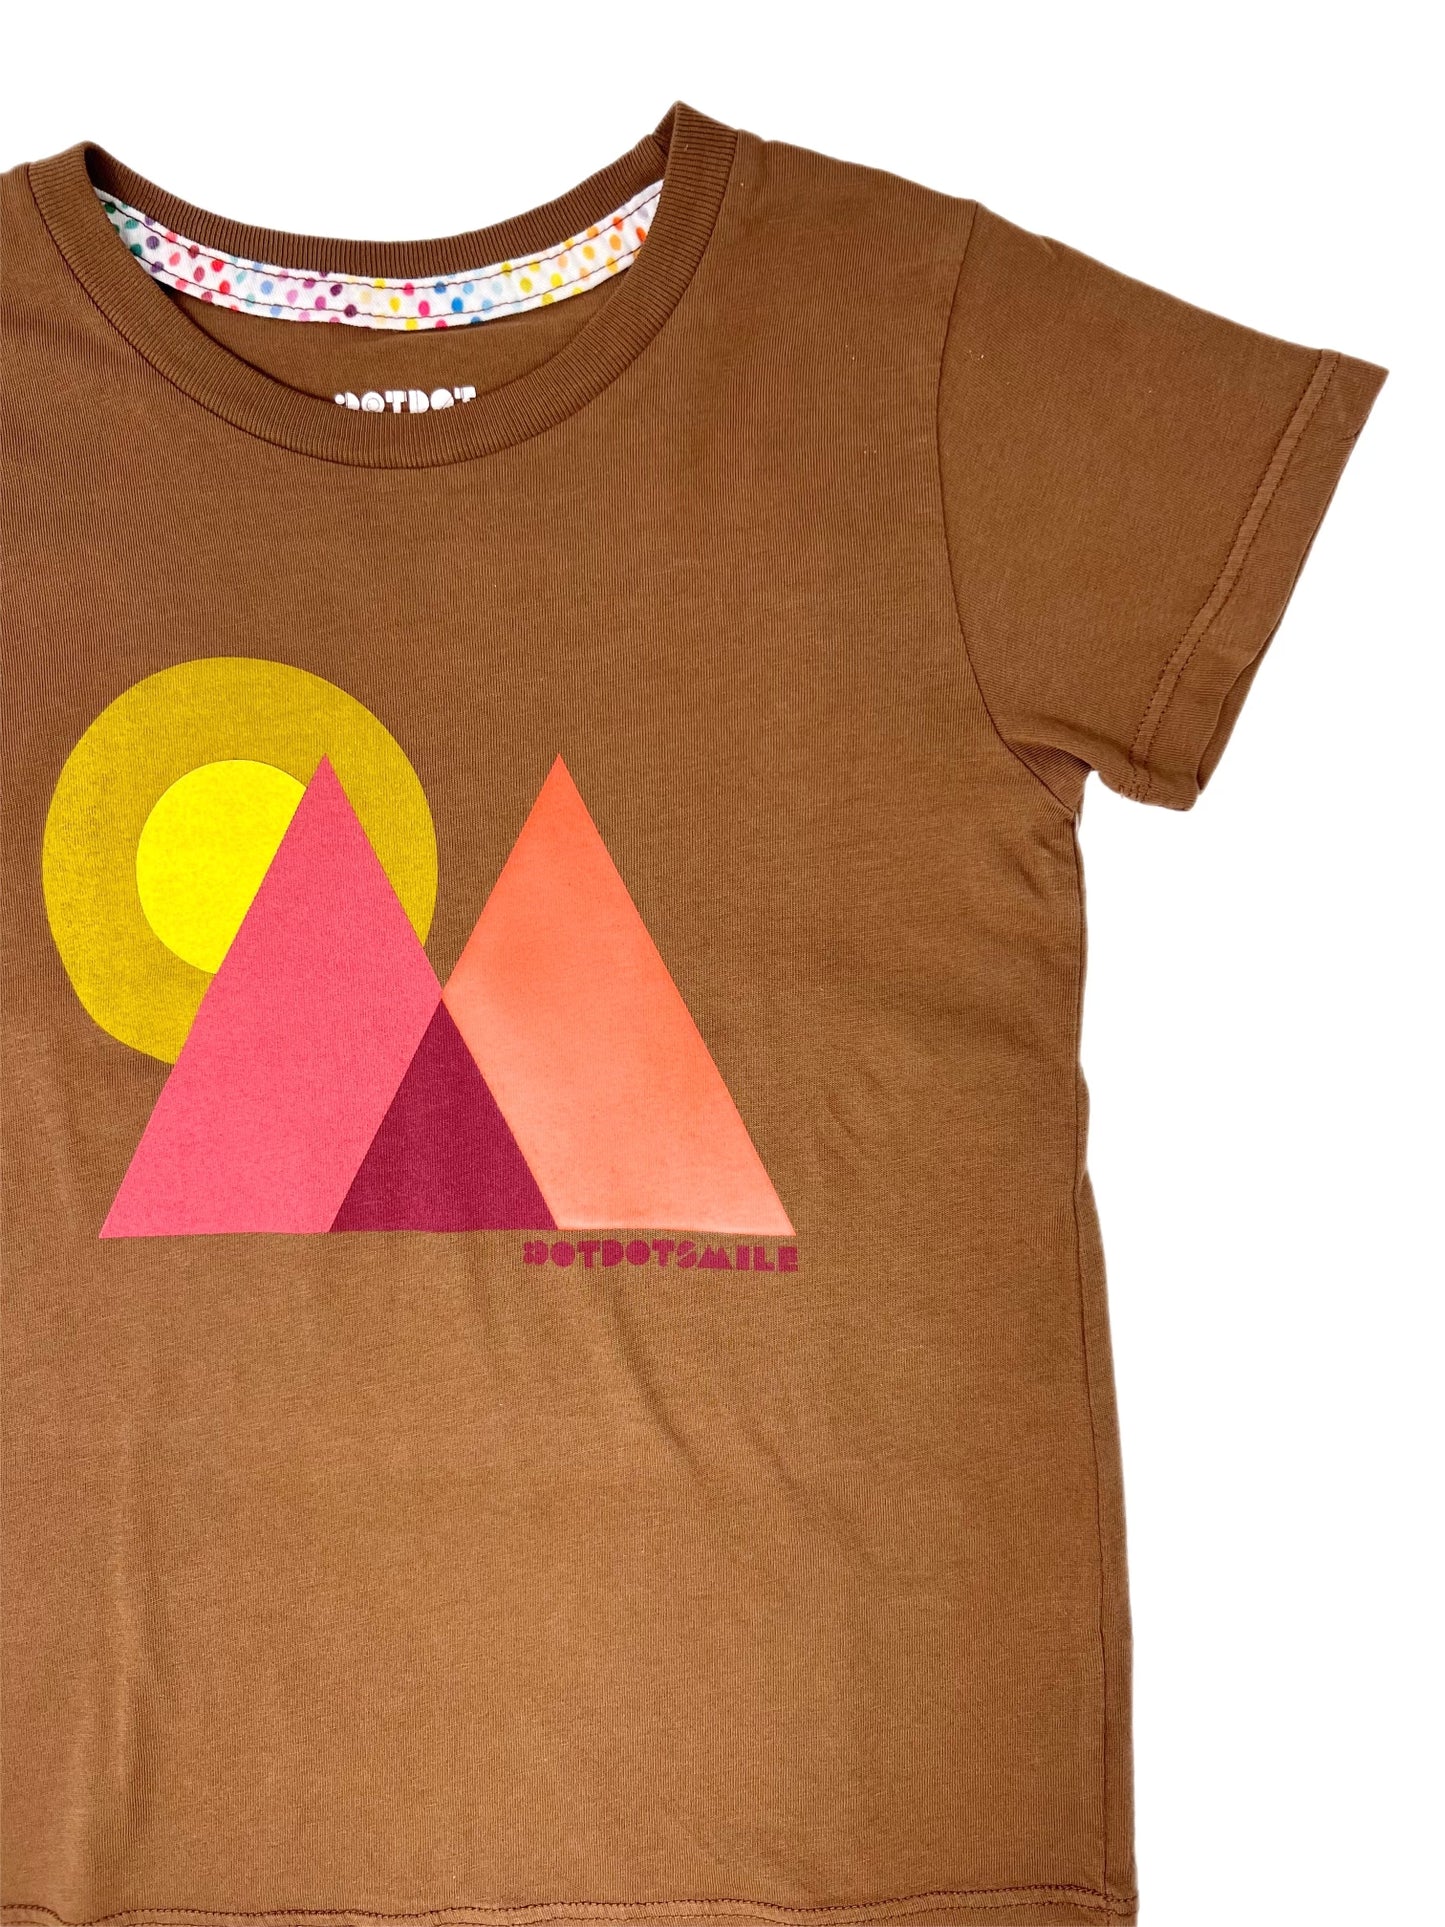 🌄 Mountain Sunrise DDS Logo T-Shirt